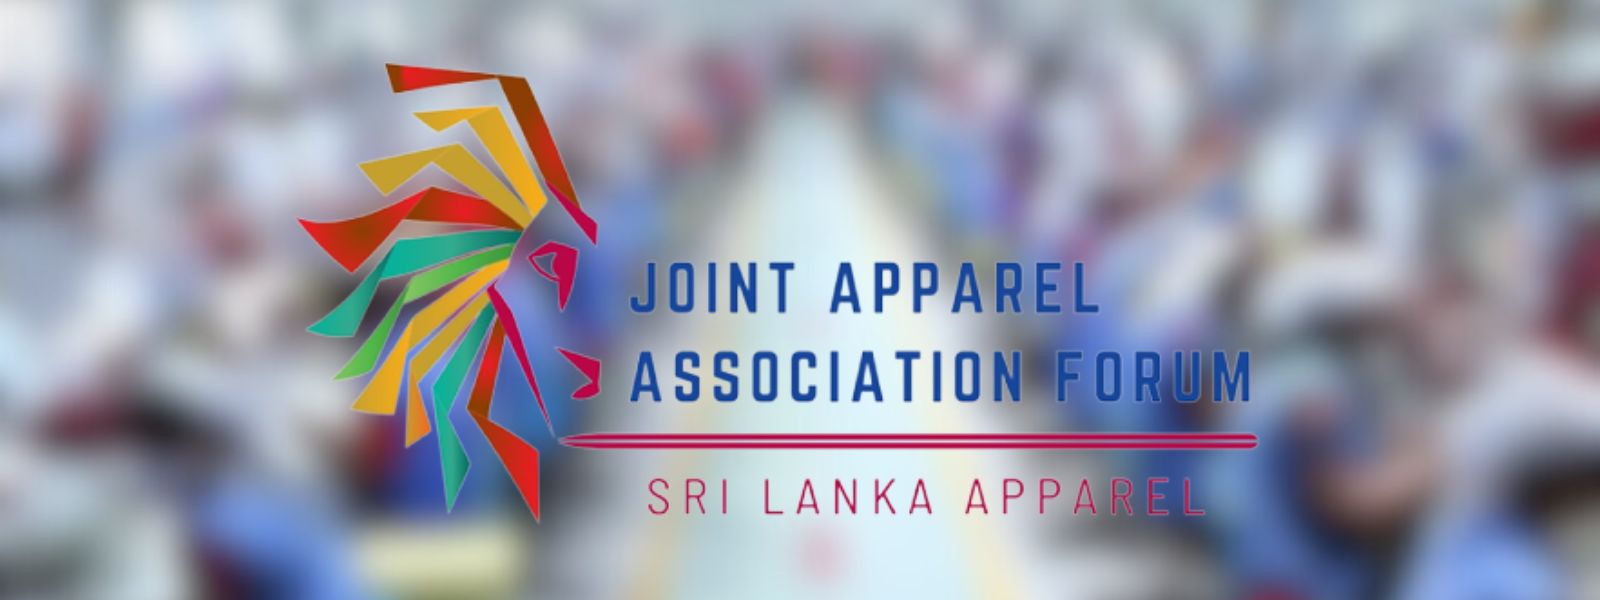 Sri Lanka’s apparel exports could decline $1 bil